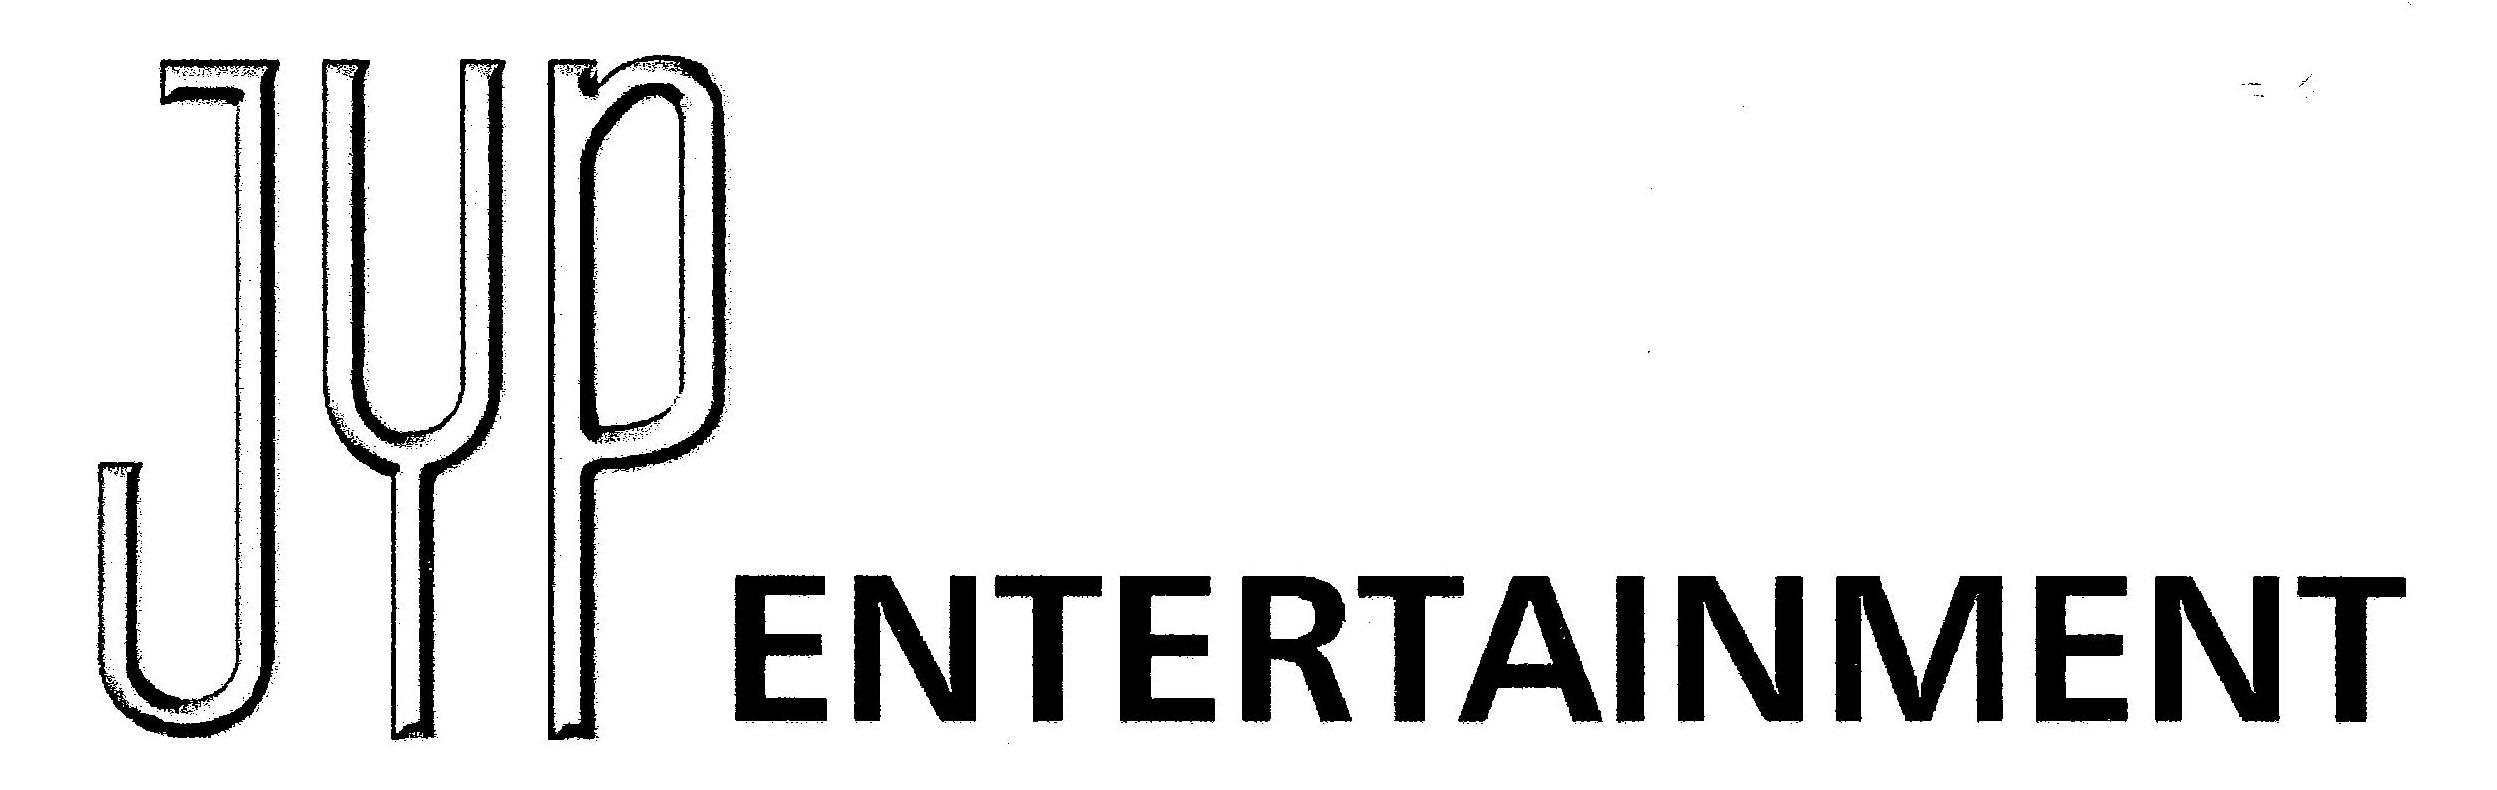 Trademark Logo JYP ENTERTAINMENT